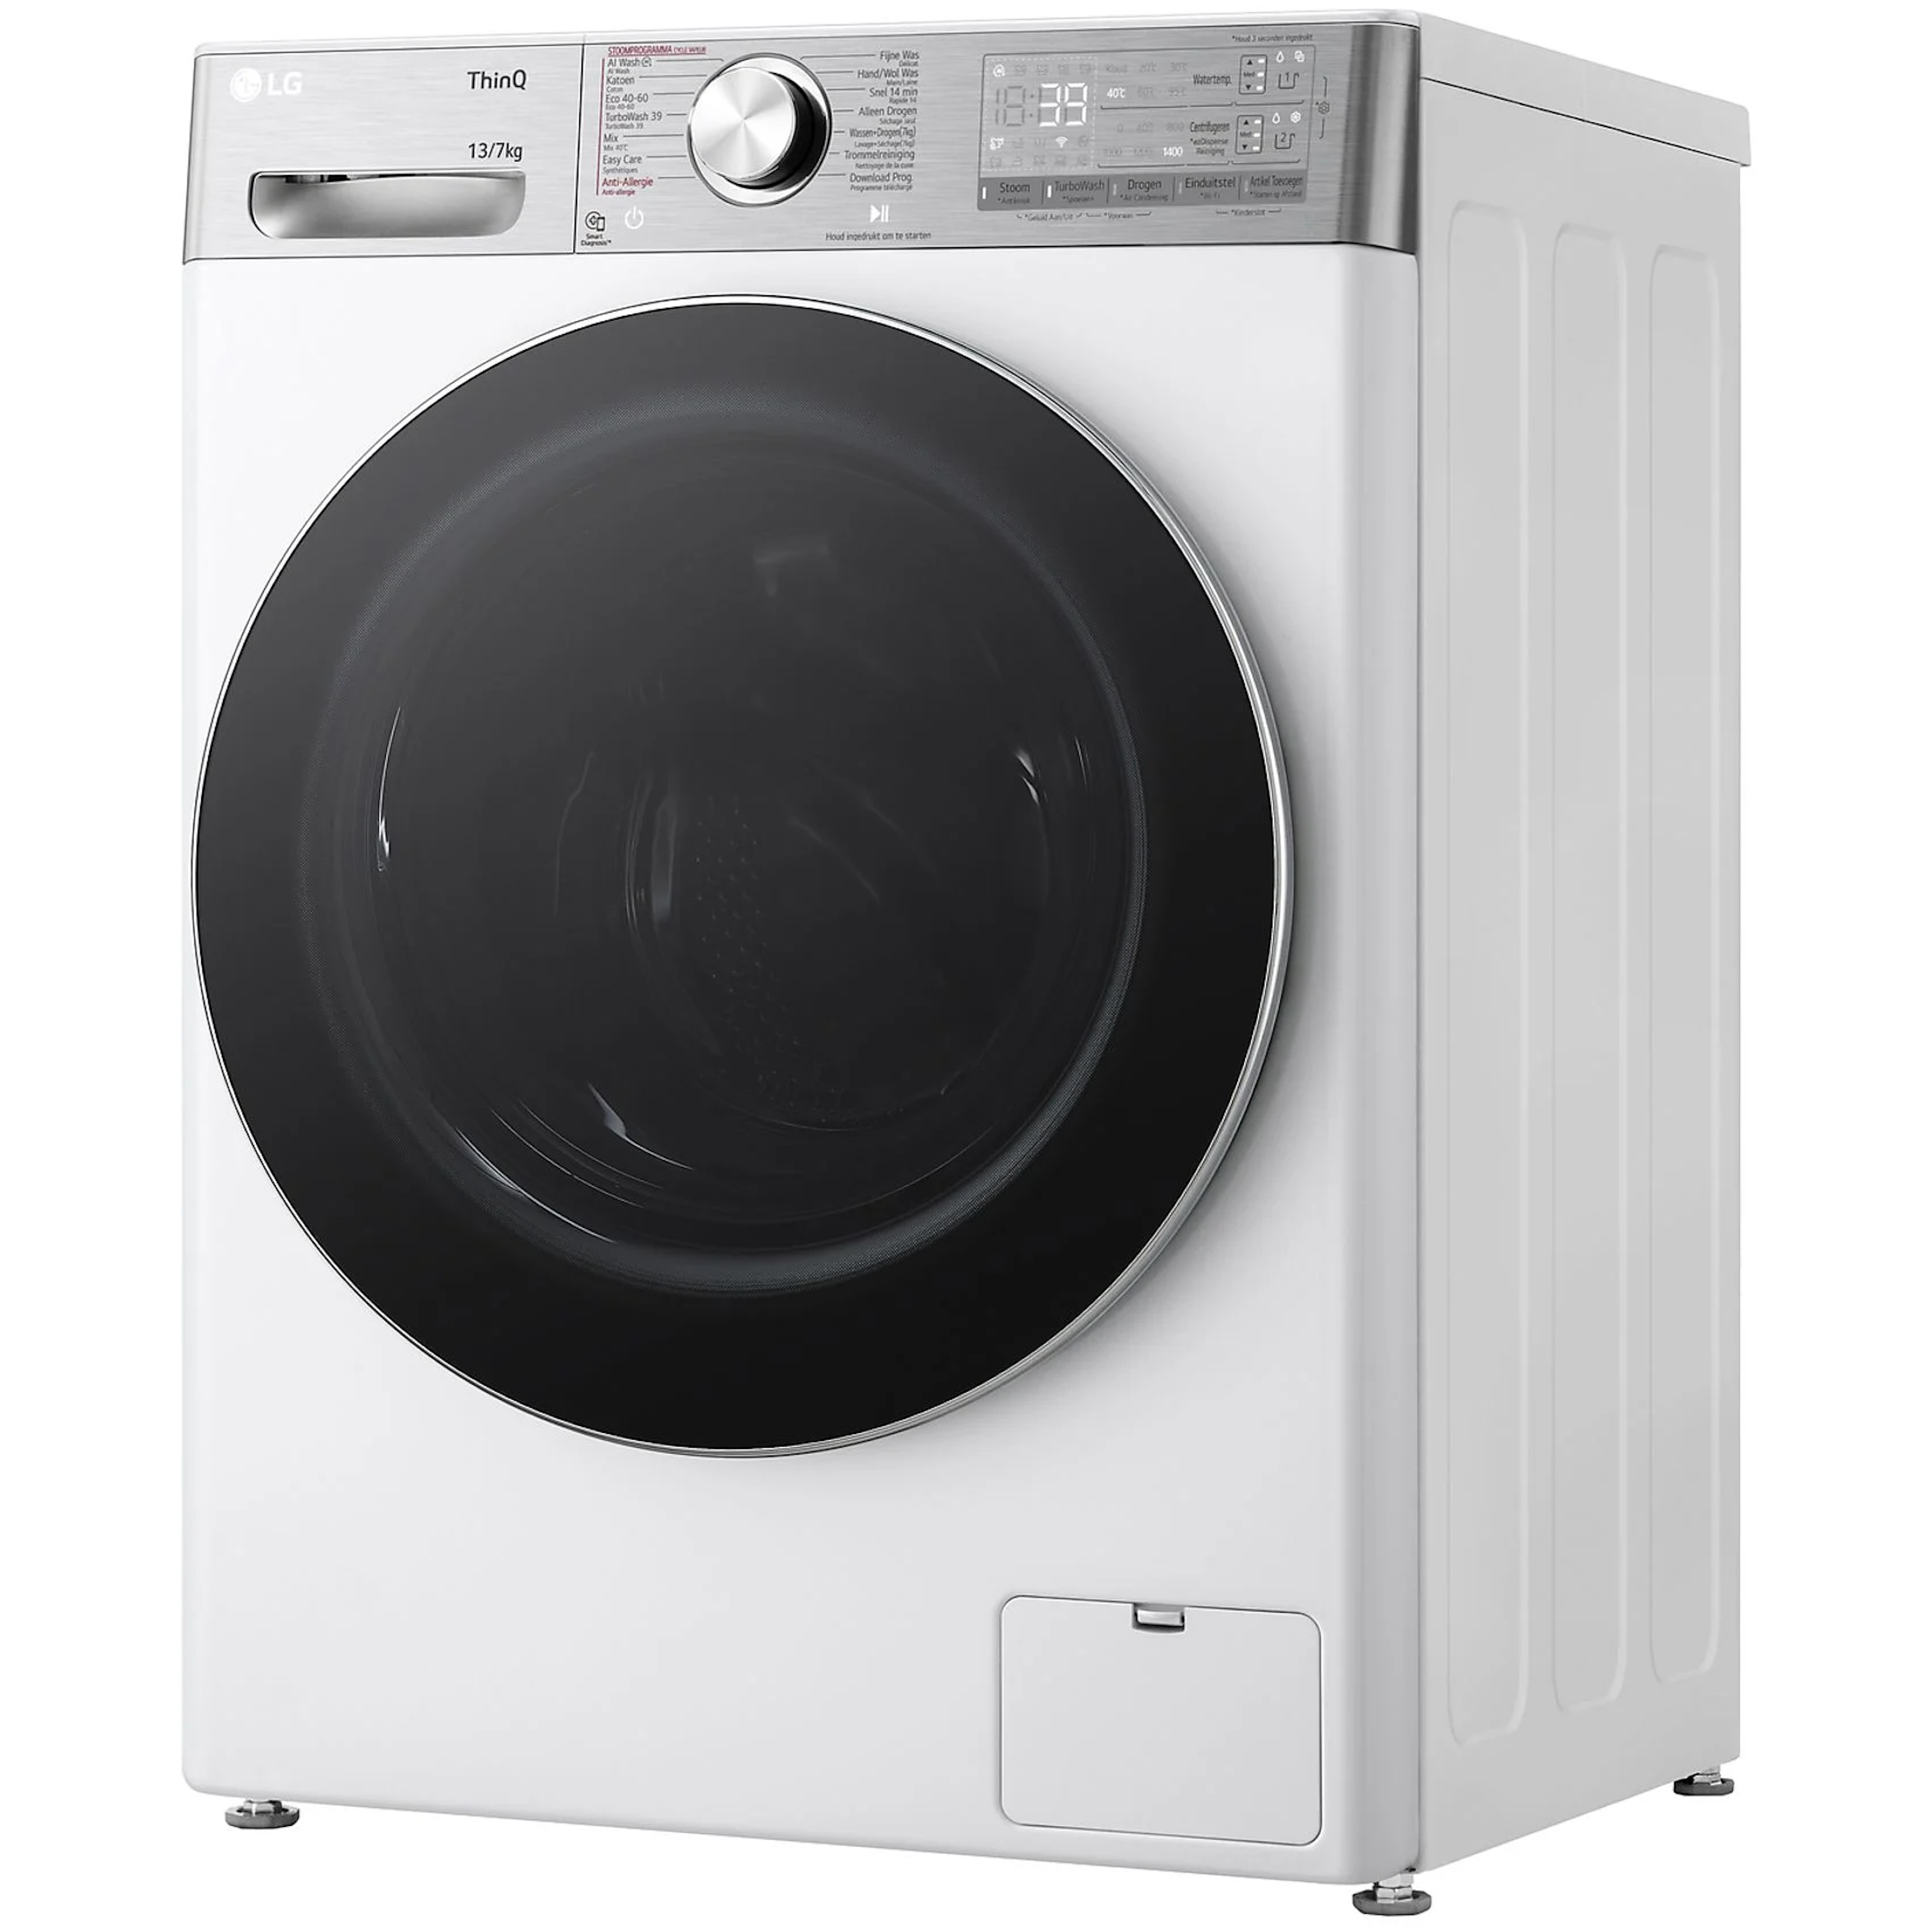 LG wasmachine F4DR9537S2W afbeelding 3